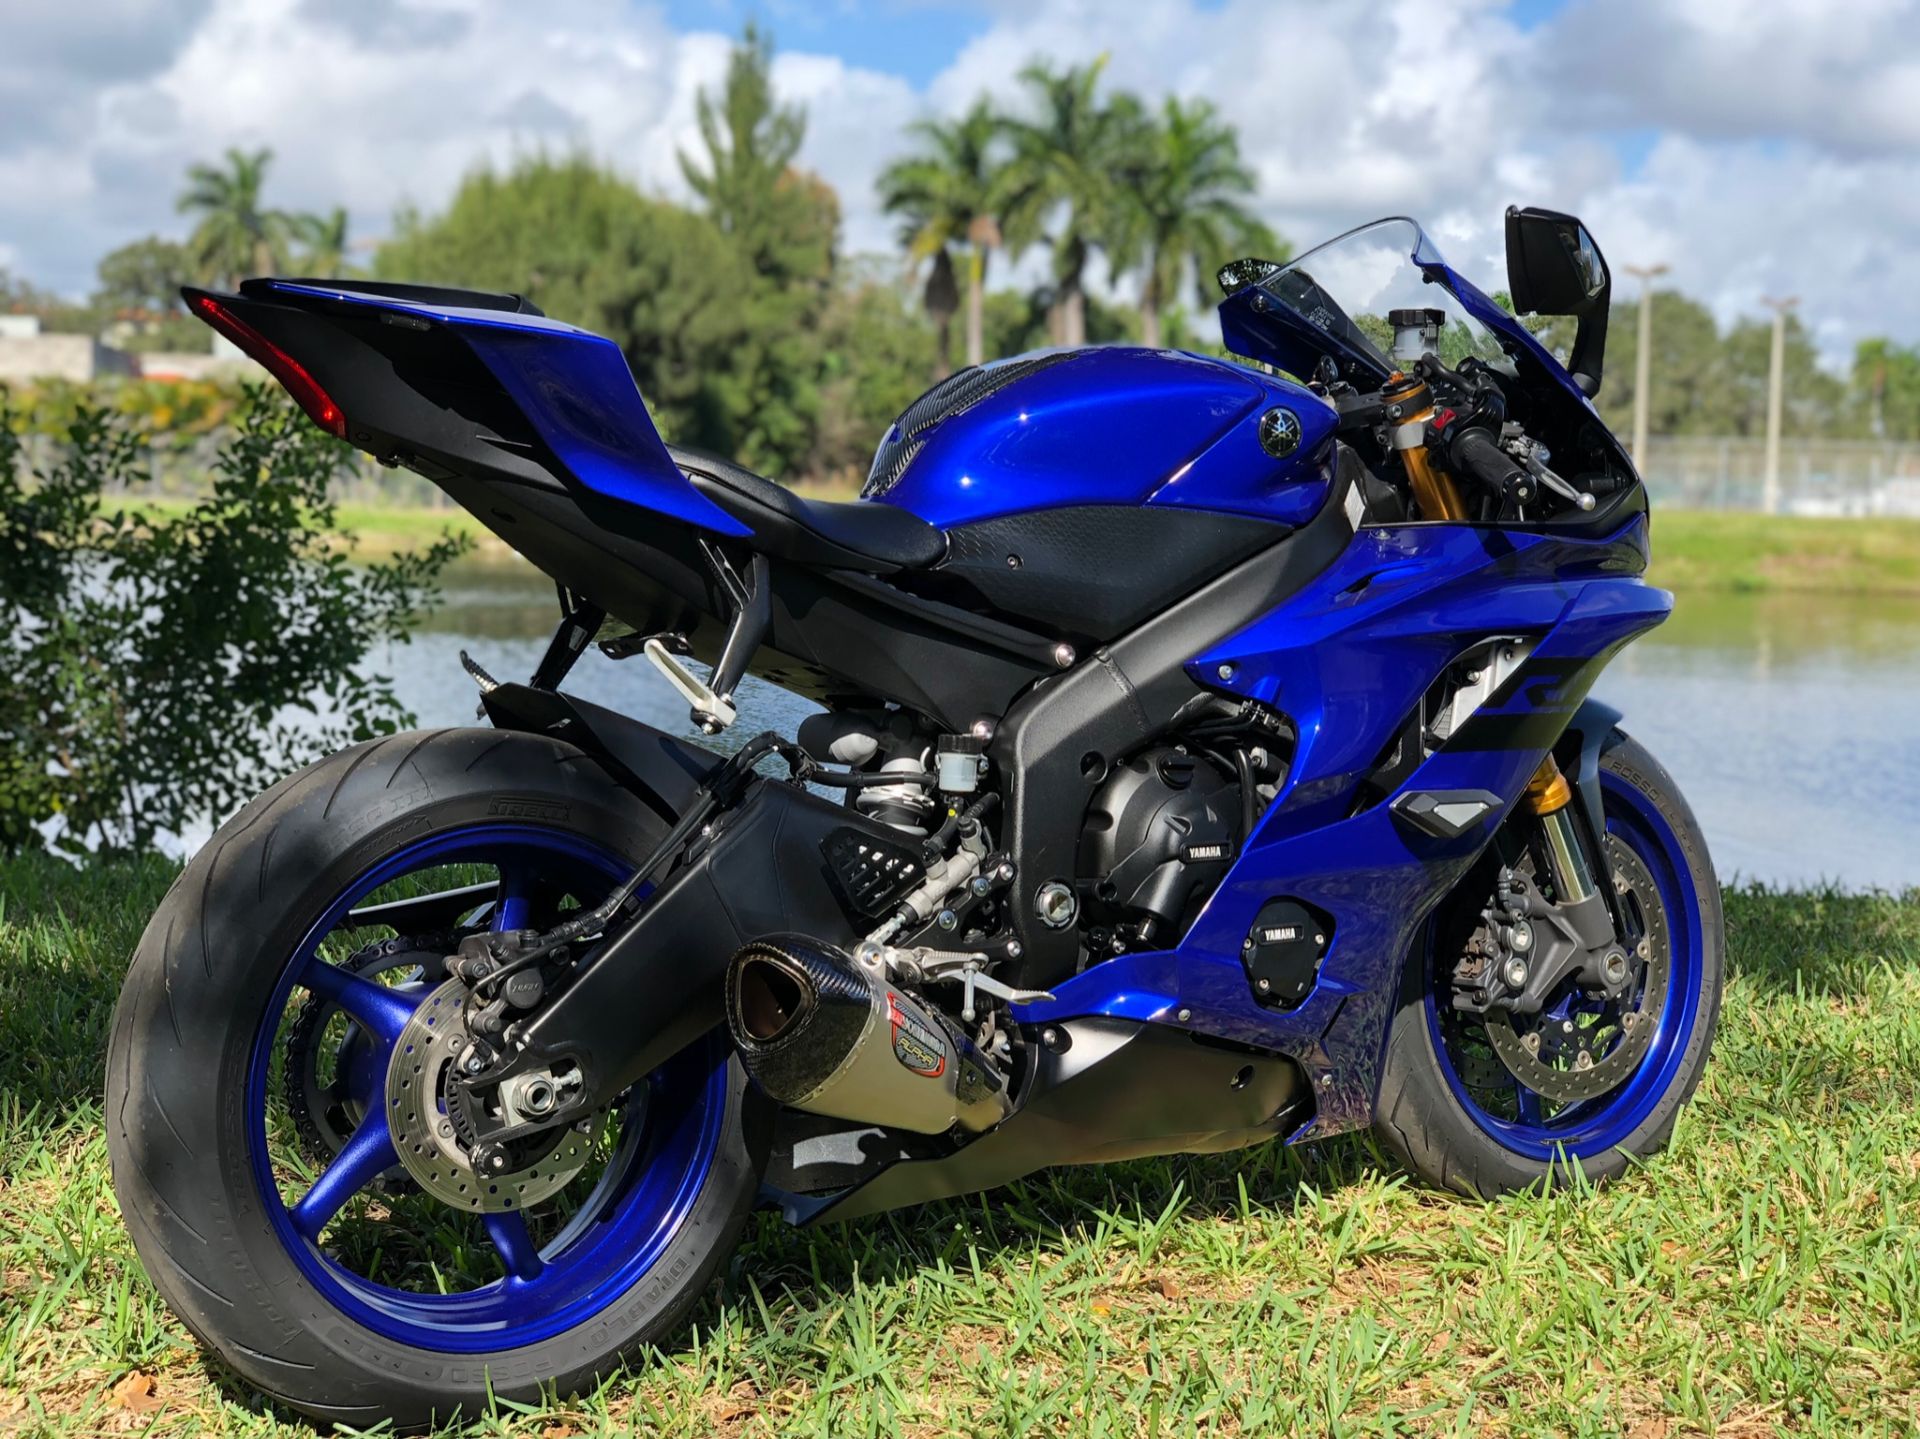 2018 Yamaha YZF-R6 in North Miami Beach, Florida - Photo 4